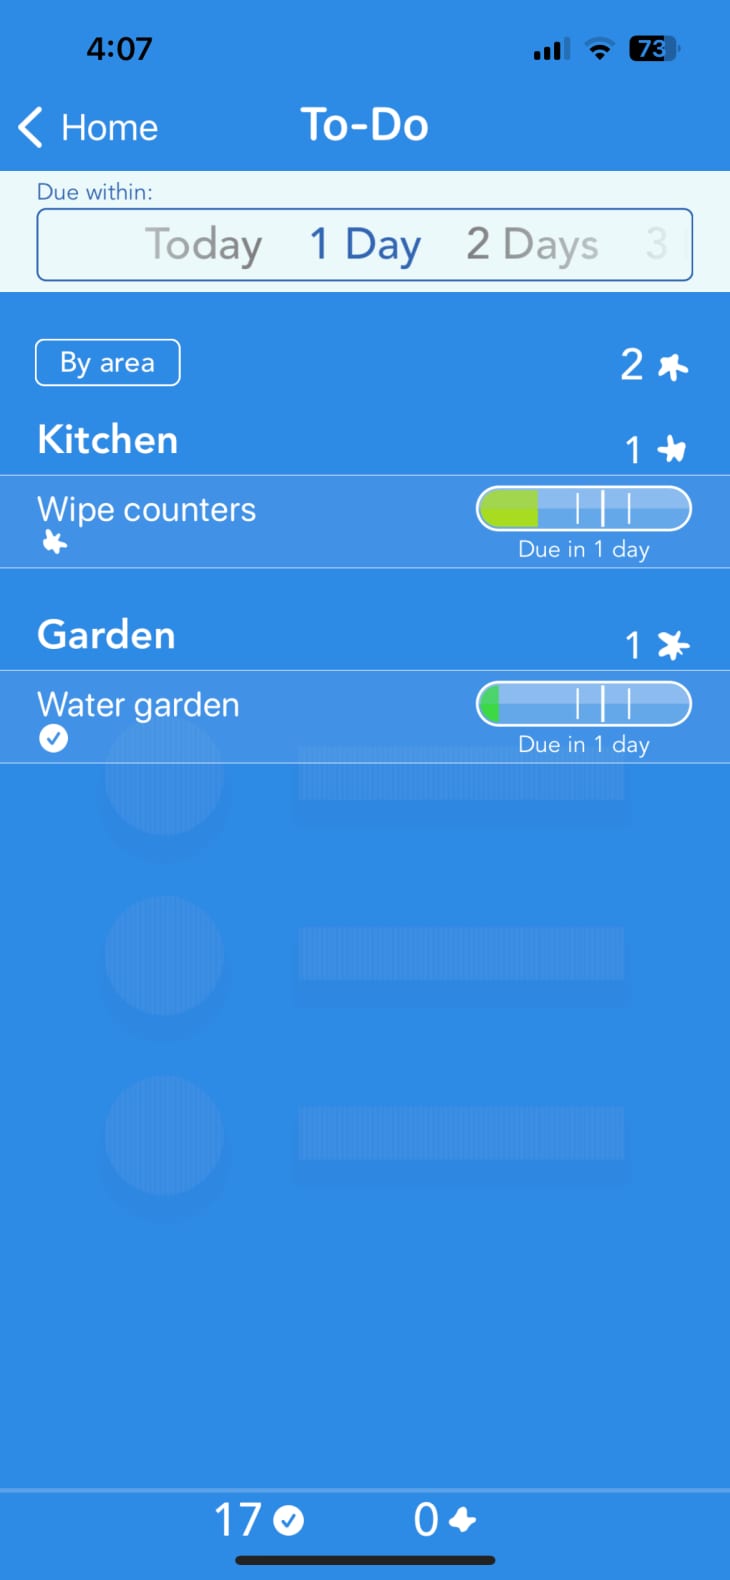 blue screen shot, data, select boxes, to-do header, progress bars, list